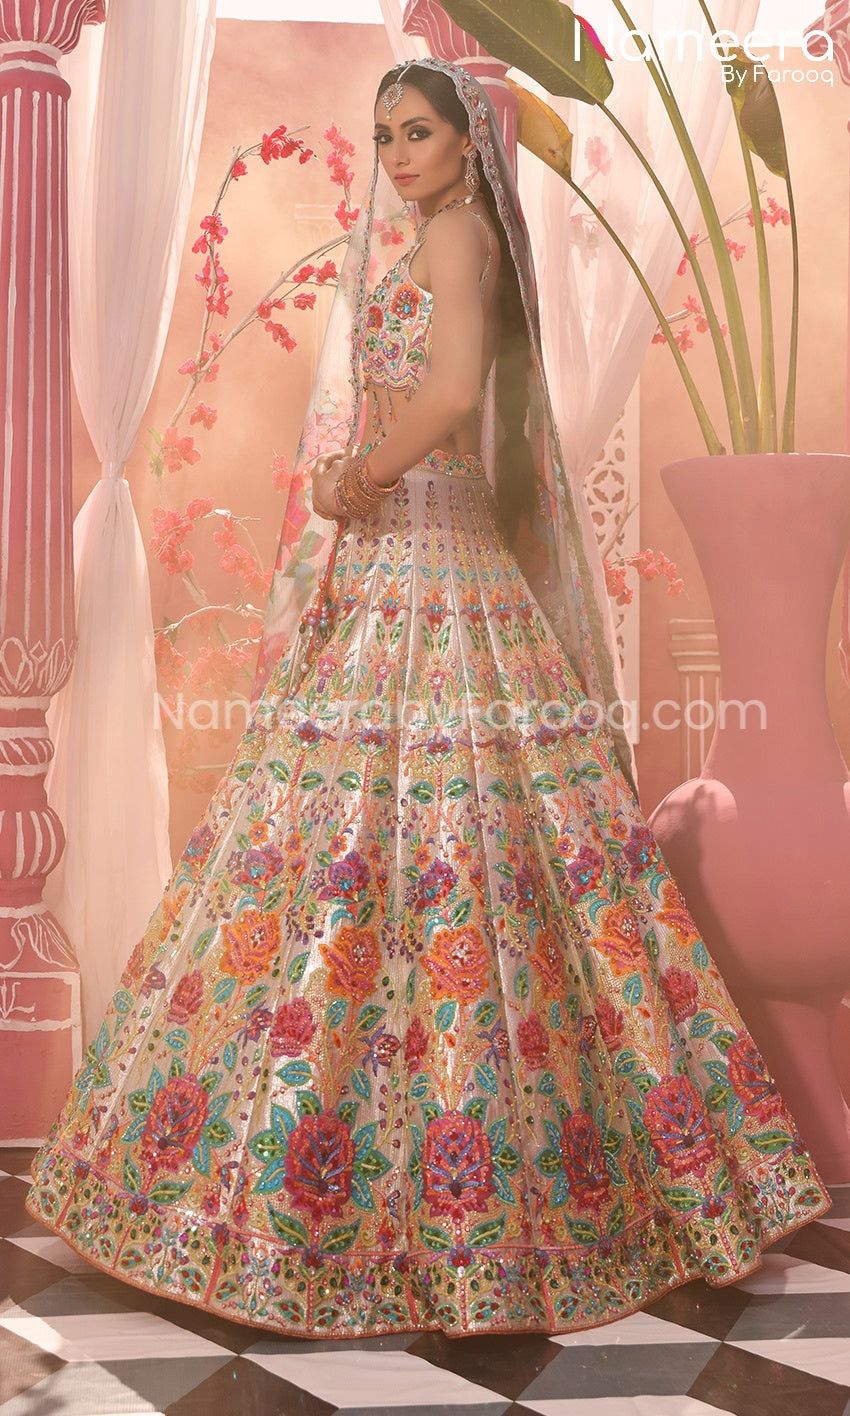 Pakistani Bridal Dresses Latest Designs Online – Page 2 – Nameera by Farooq